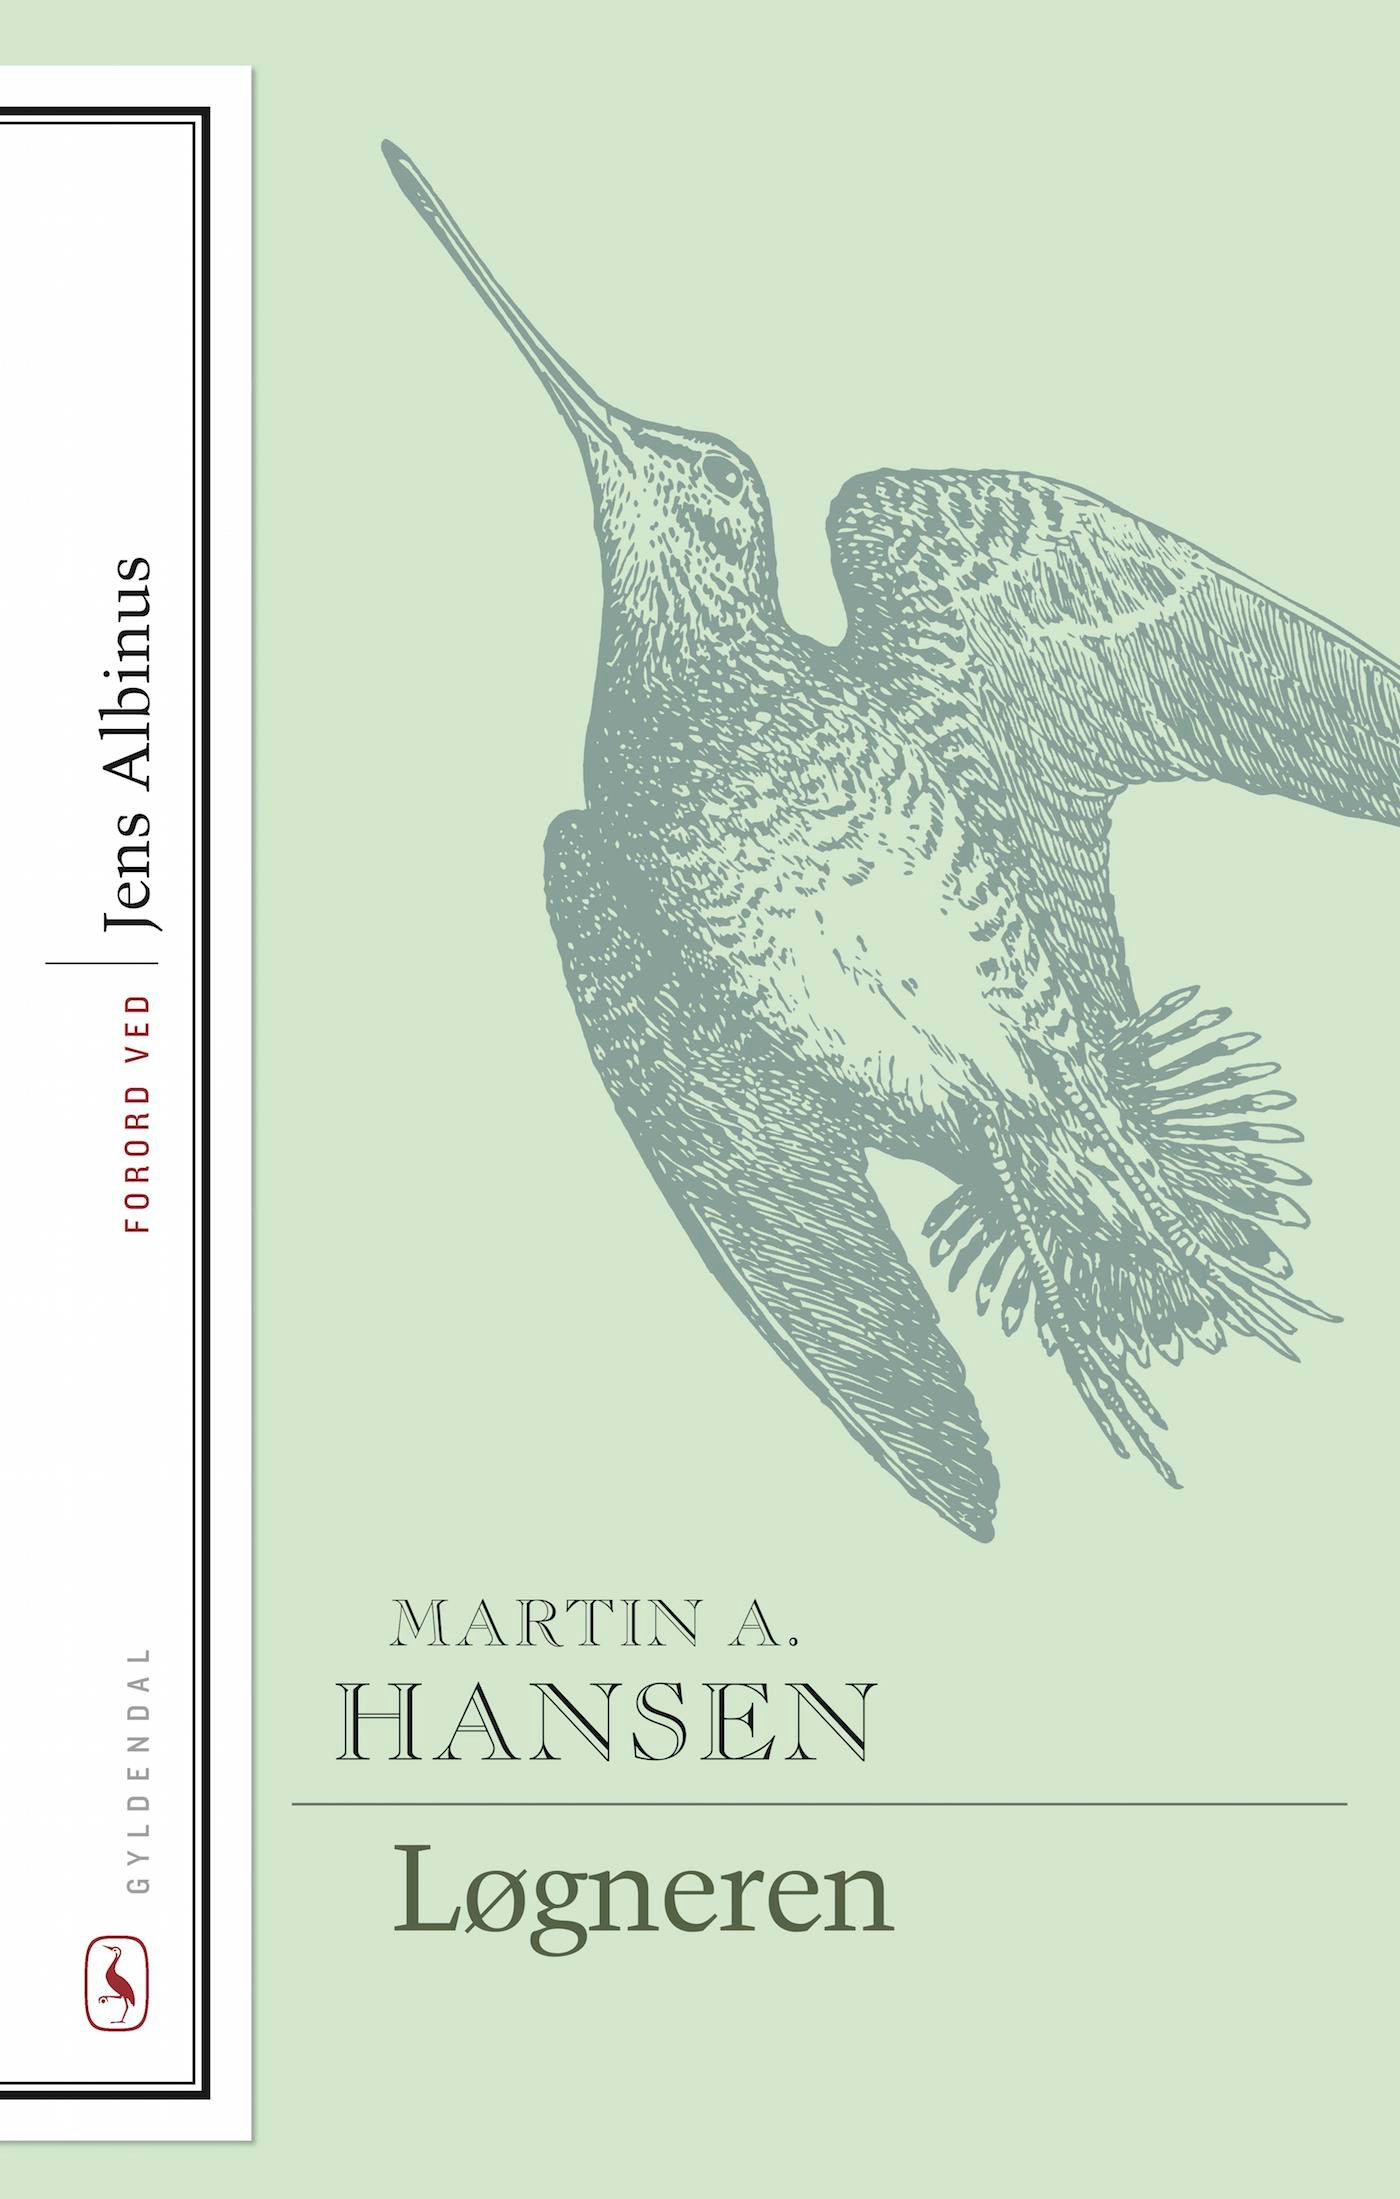 Løgneren, e-bog af Martin A. Hansen